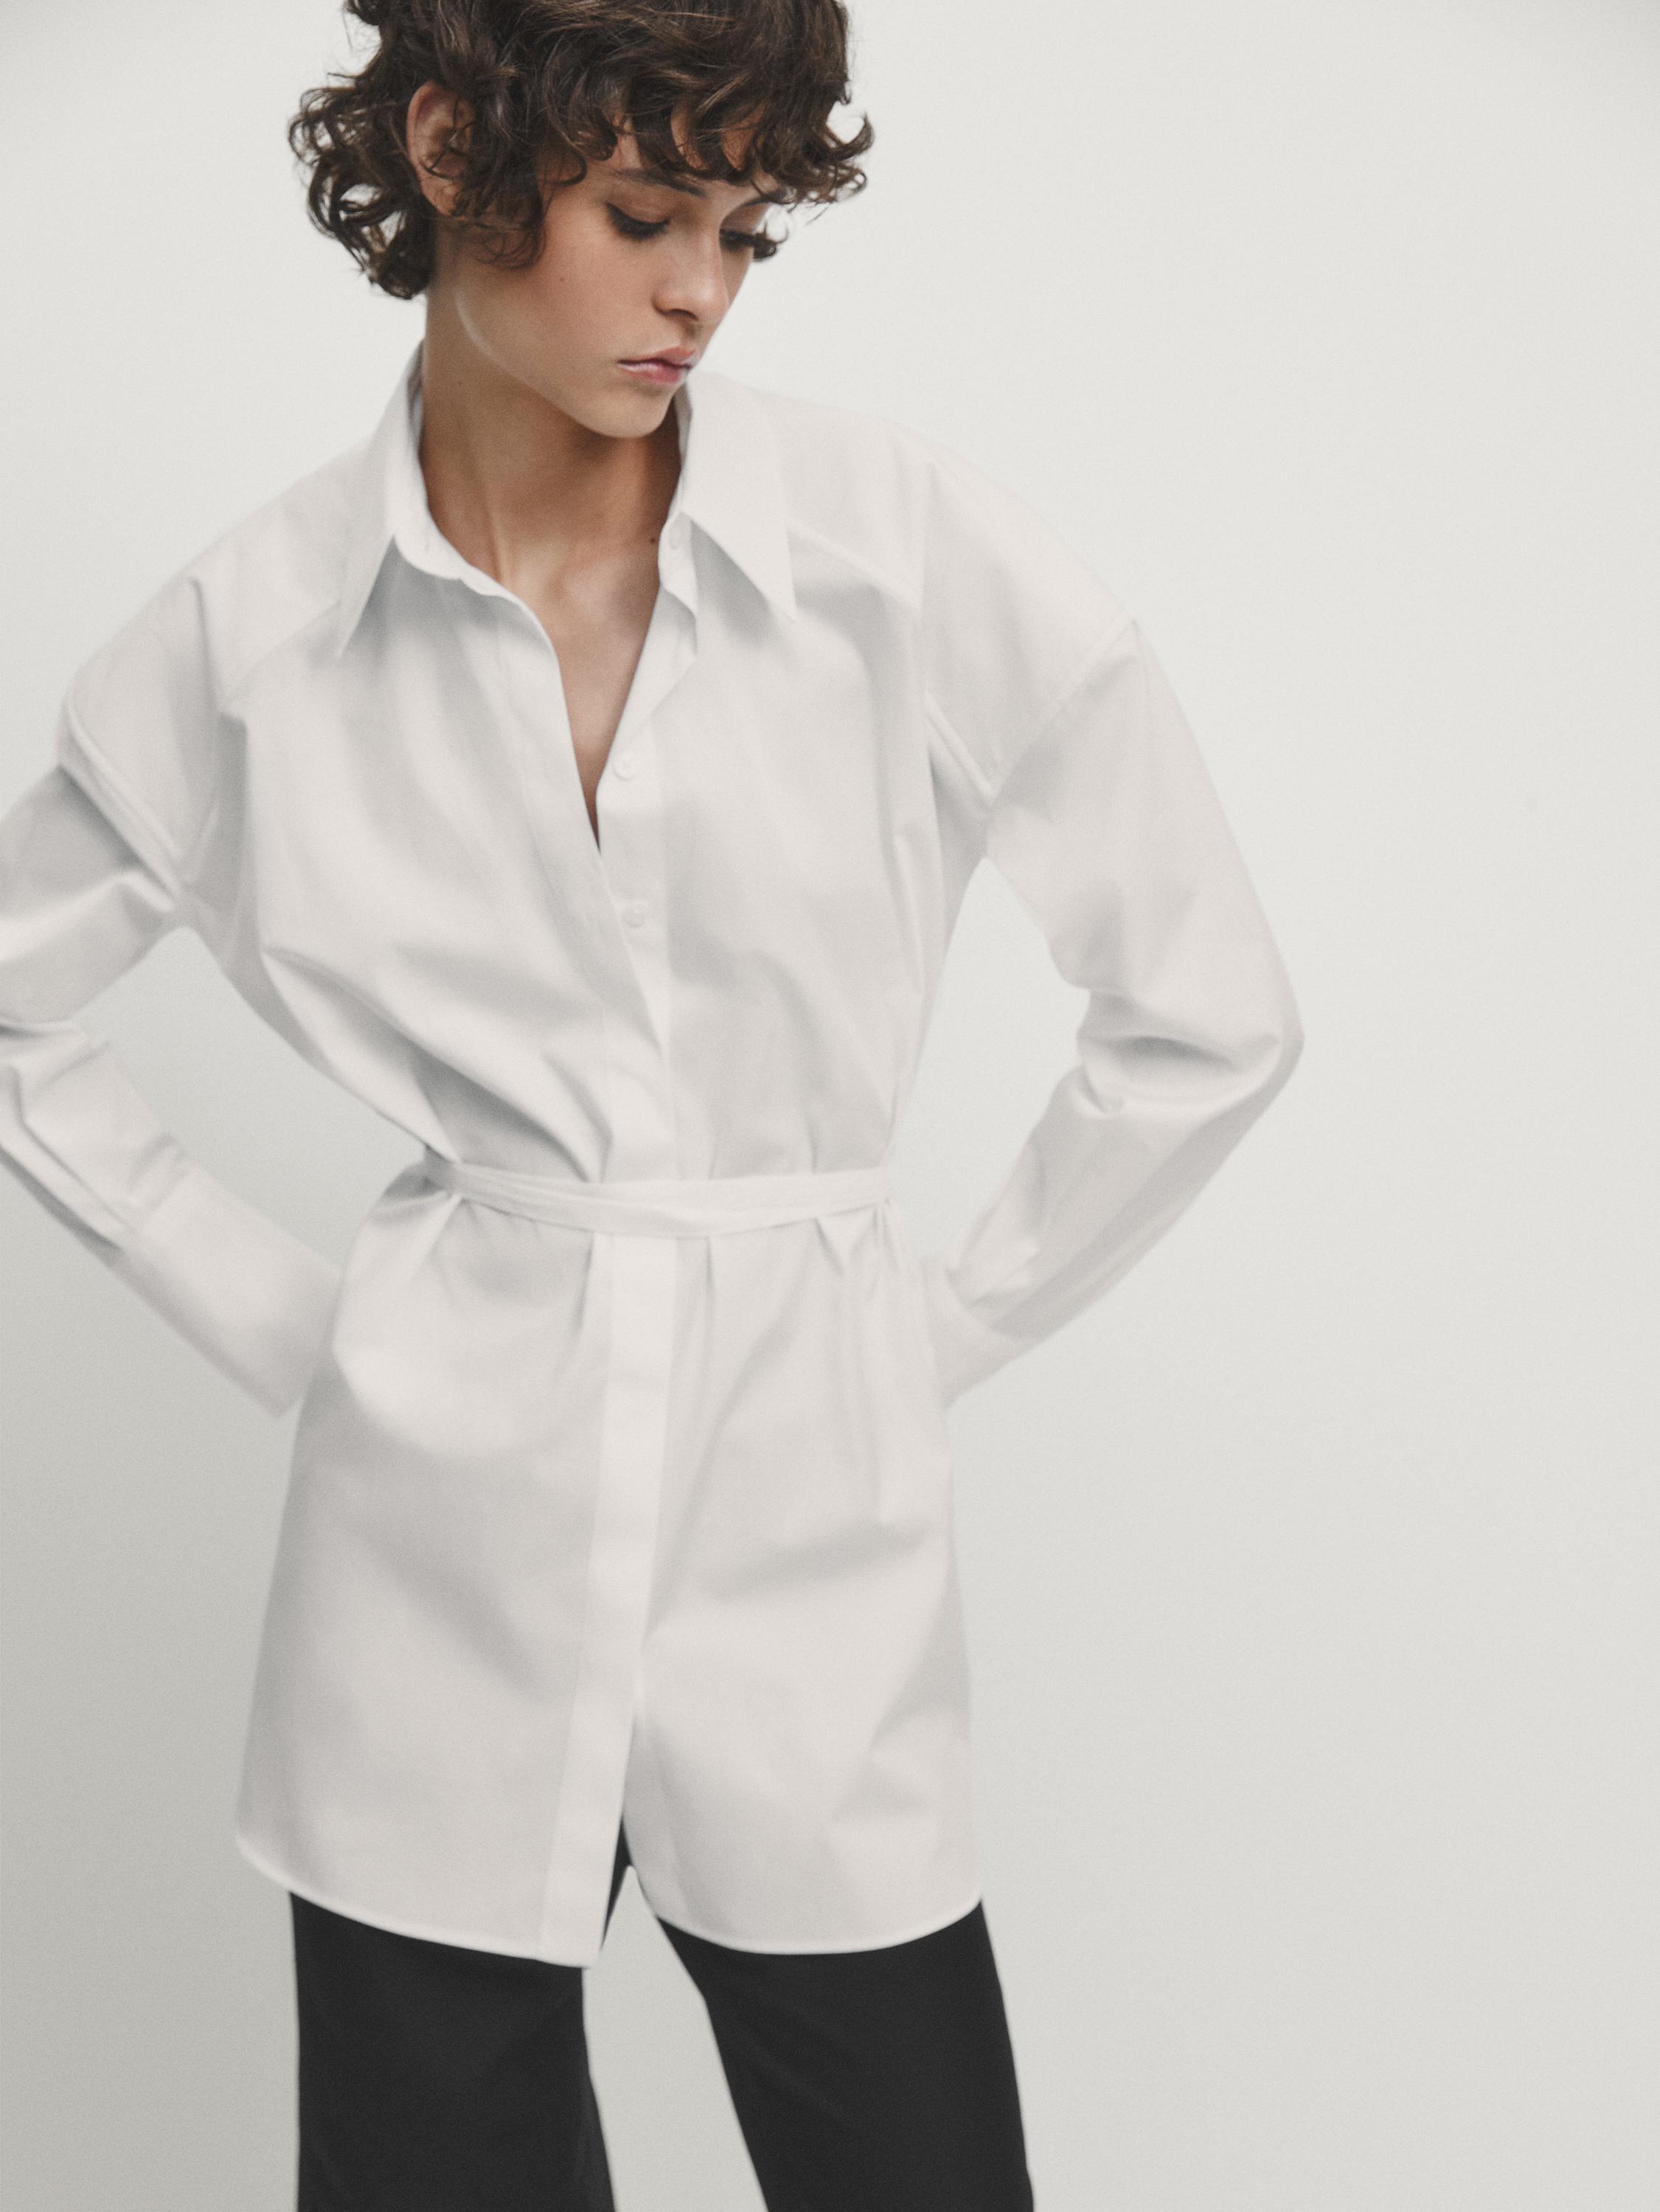 Shirt with shoulder detail - Studio - White | ZARA United States